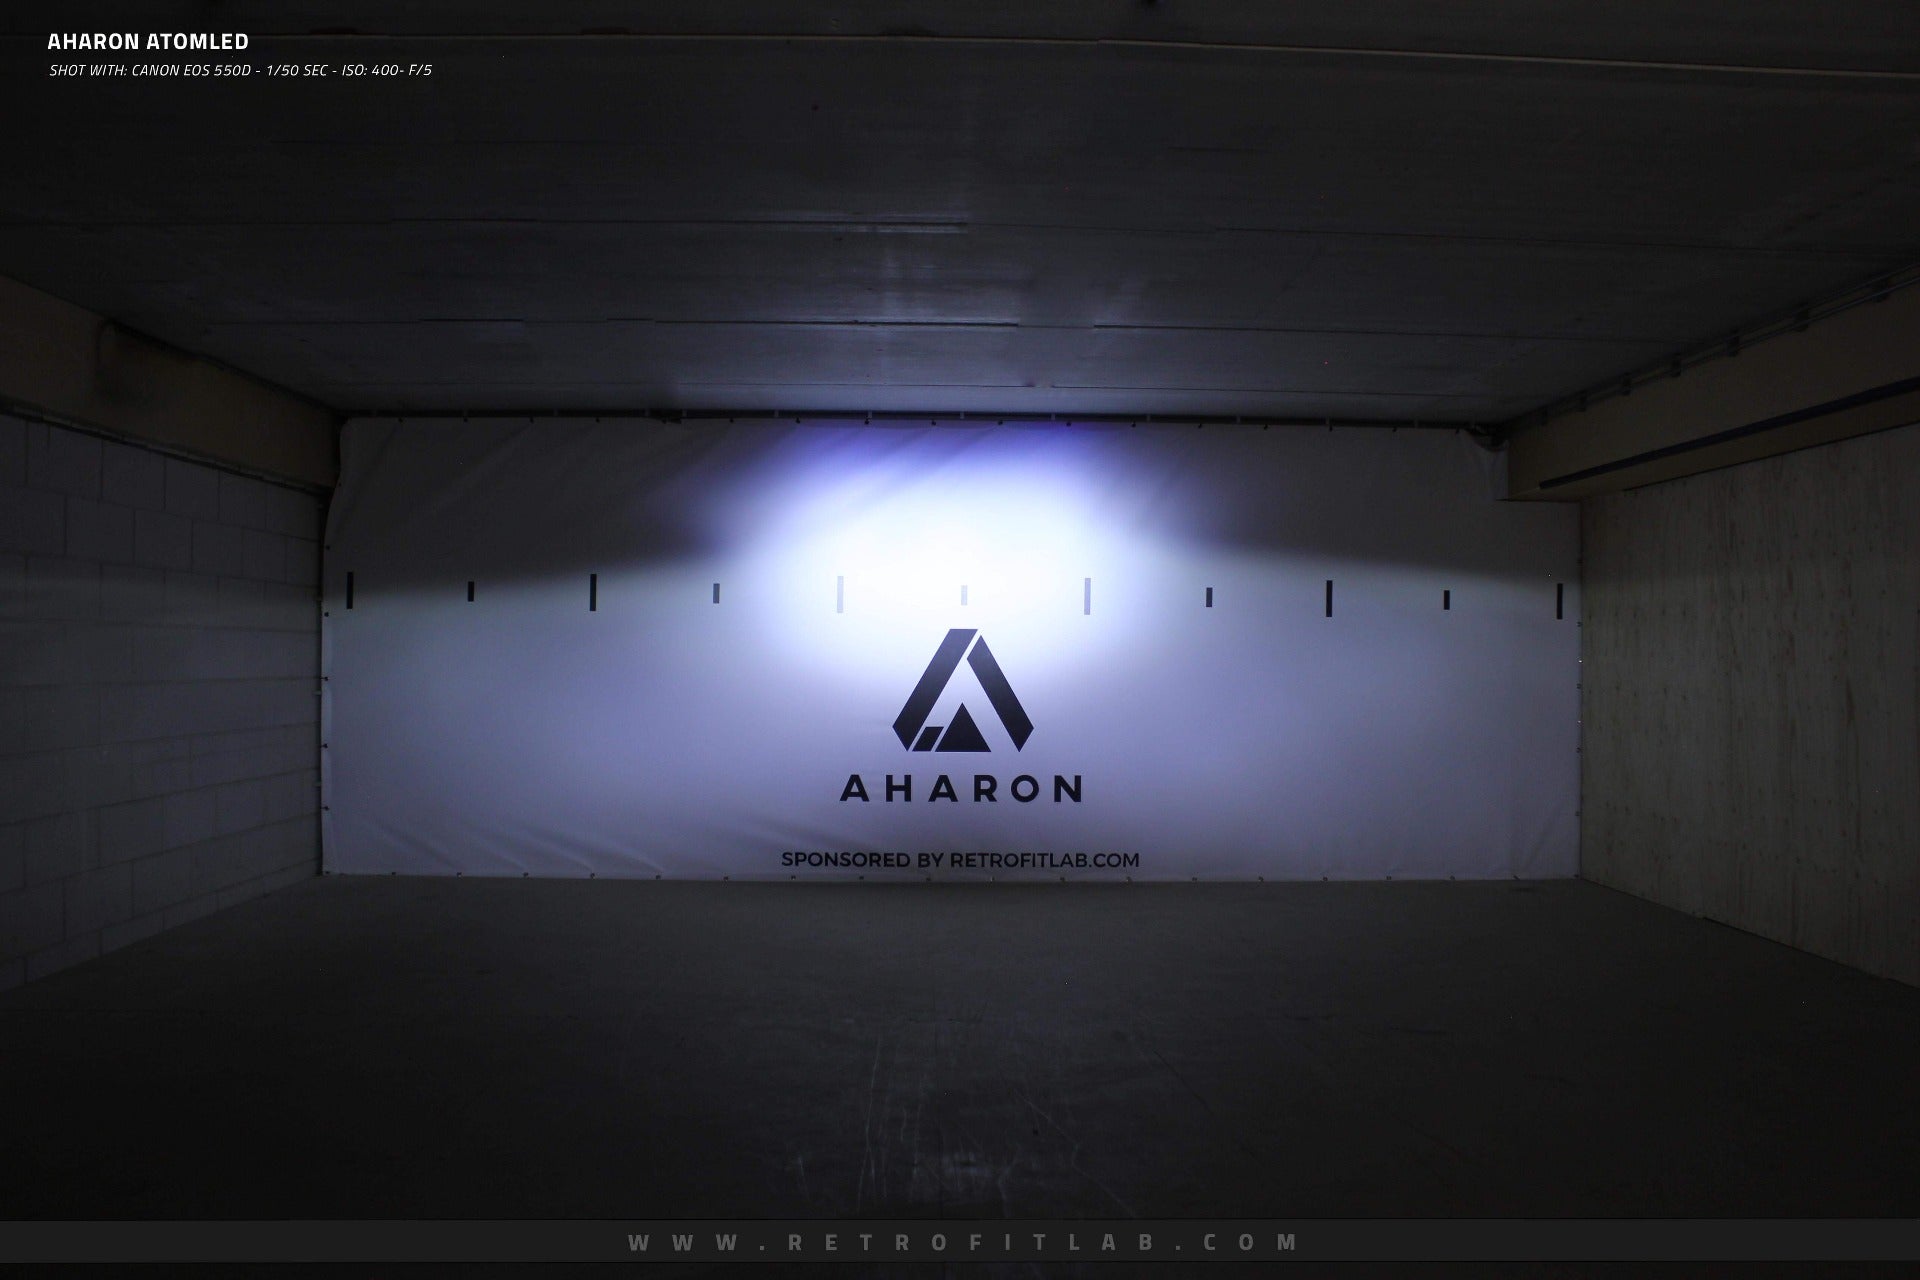 Aharon bi-led projector AtomLED X2 Retrofitlab high beam